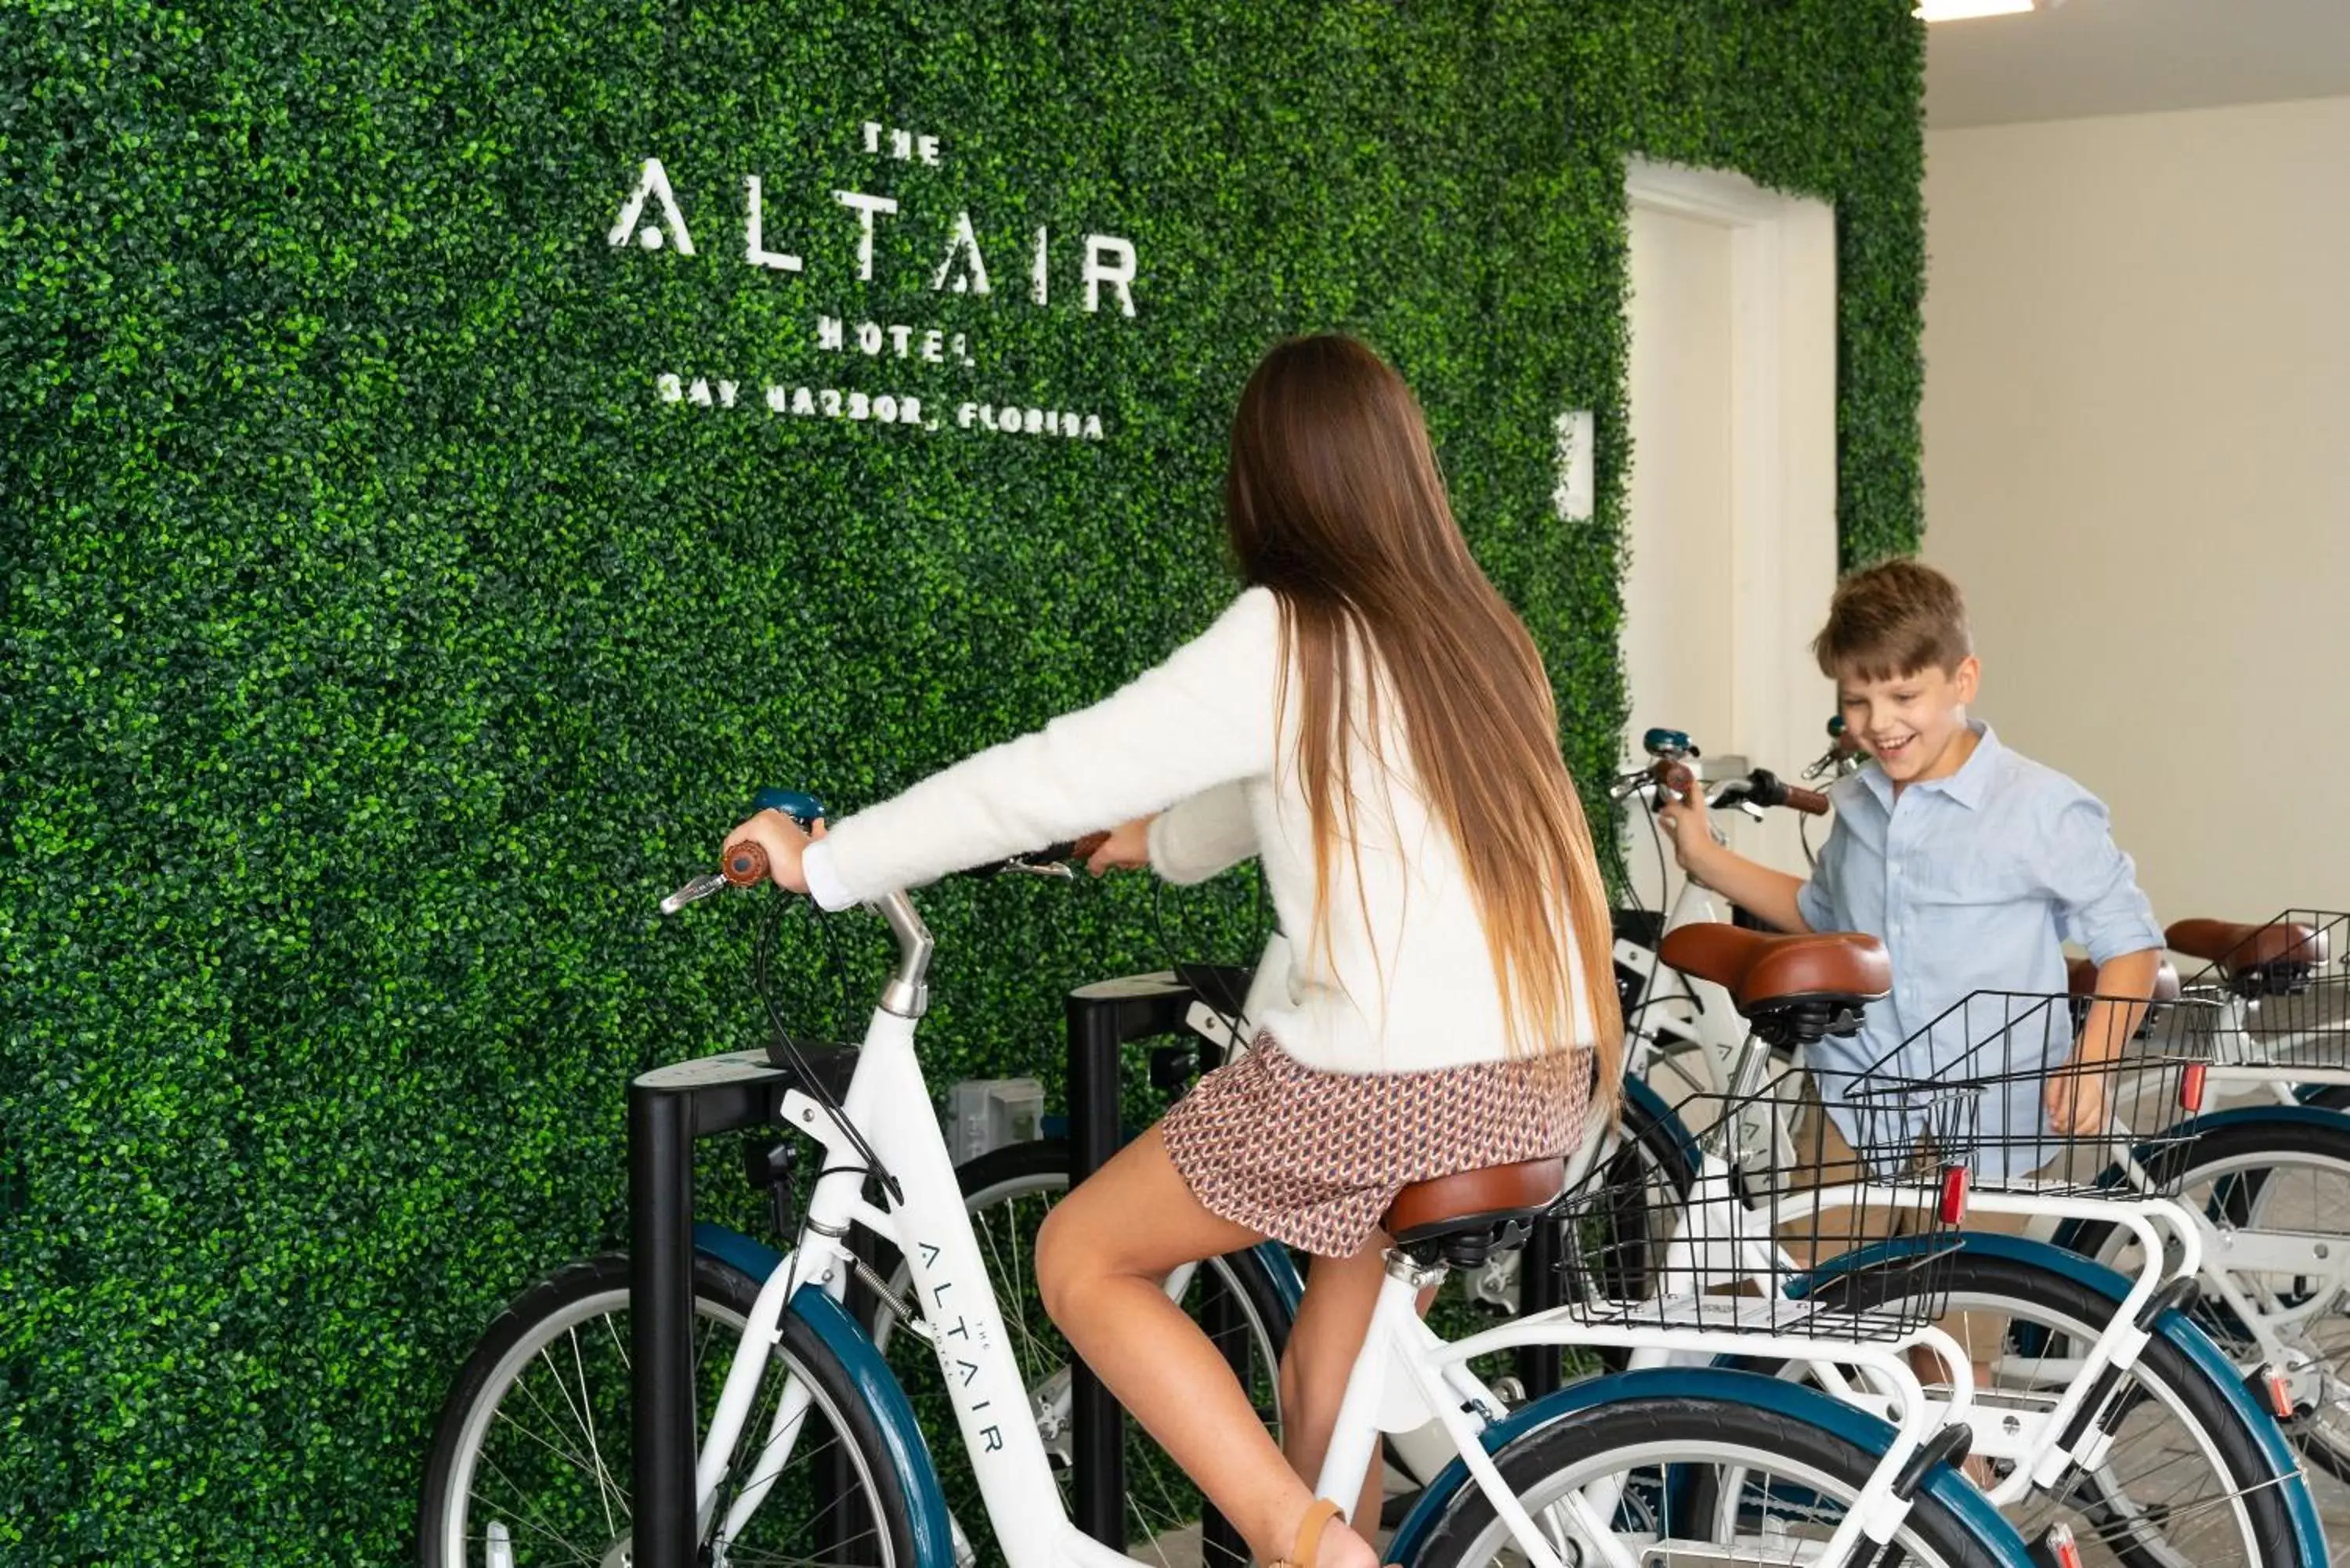 Sports, Biking in The Altair Bay Harbor Hotel